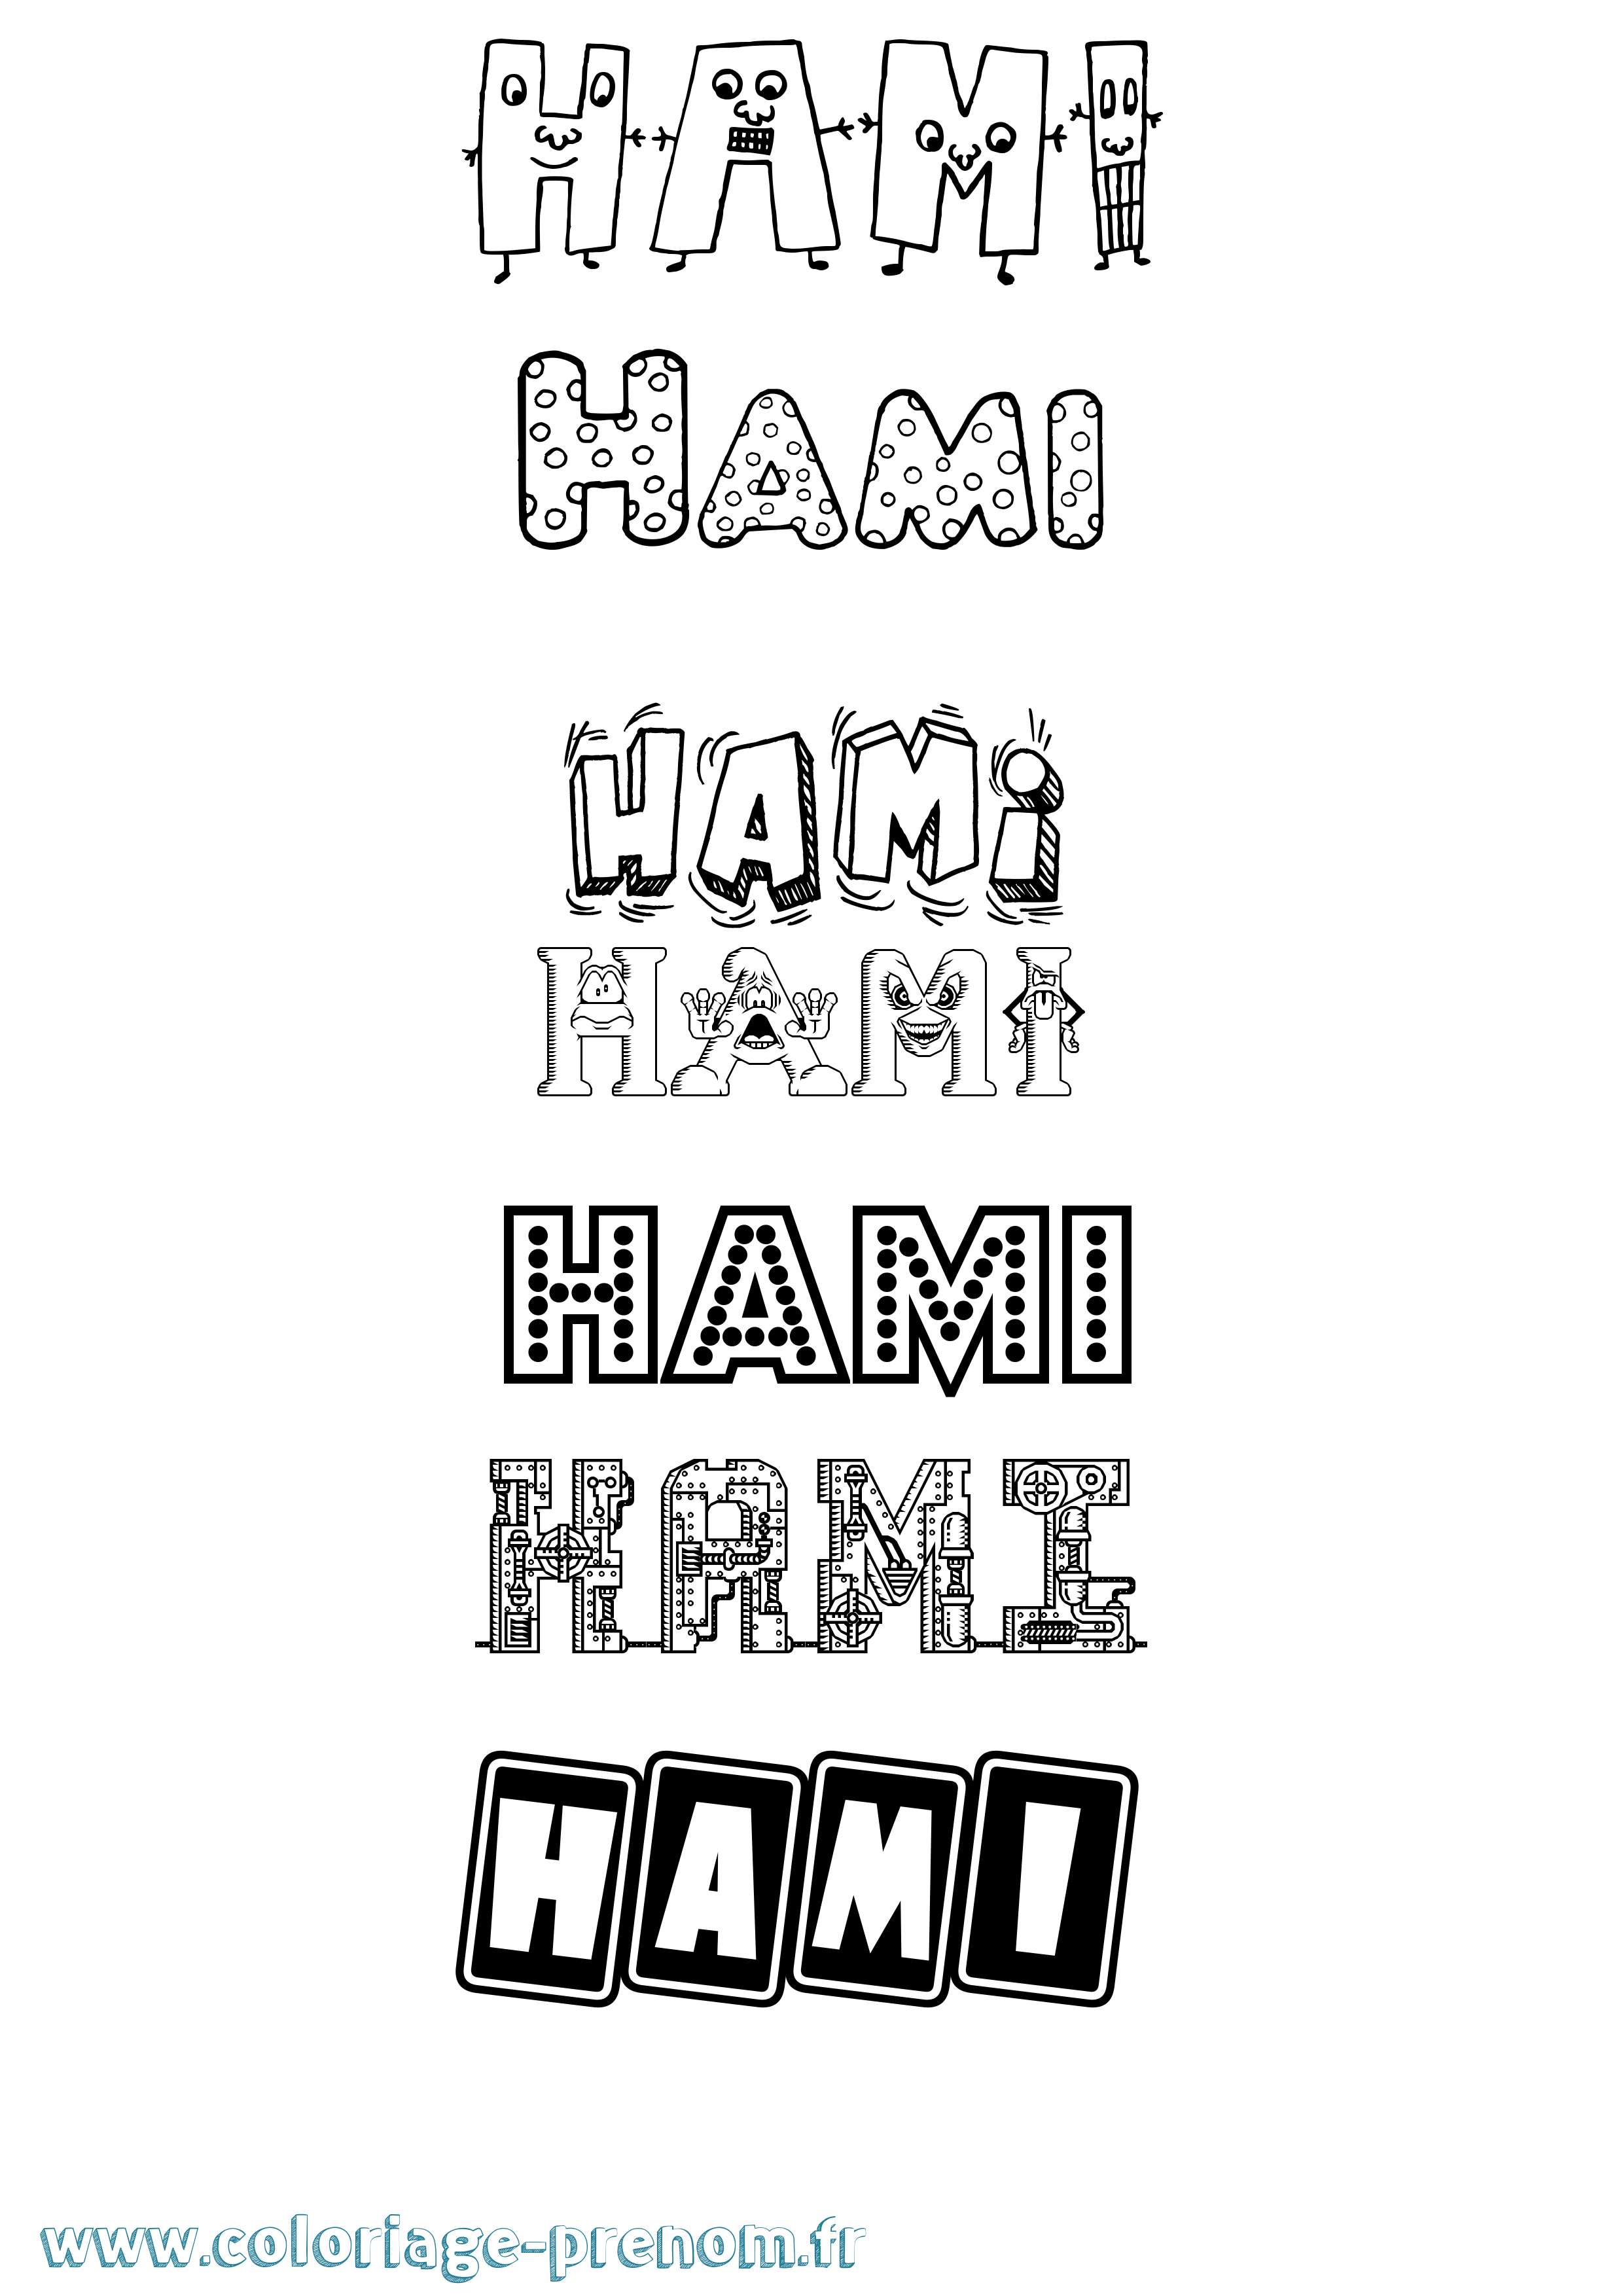 Coloriage prénom Hami Fun